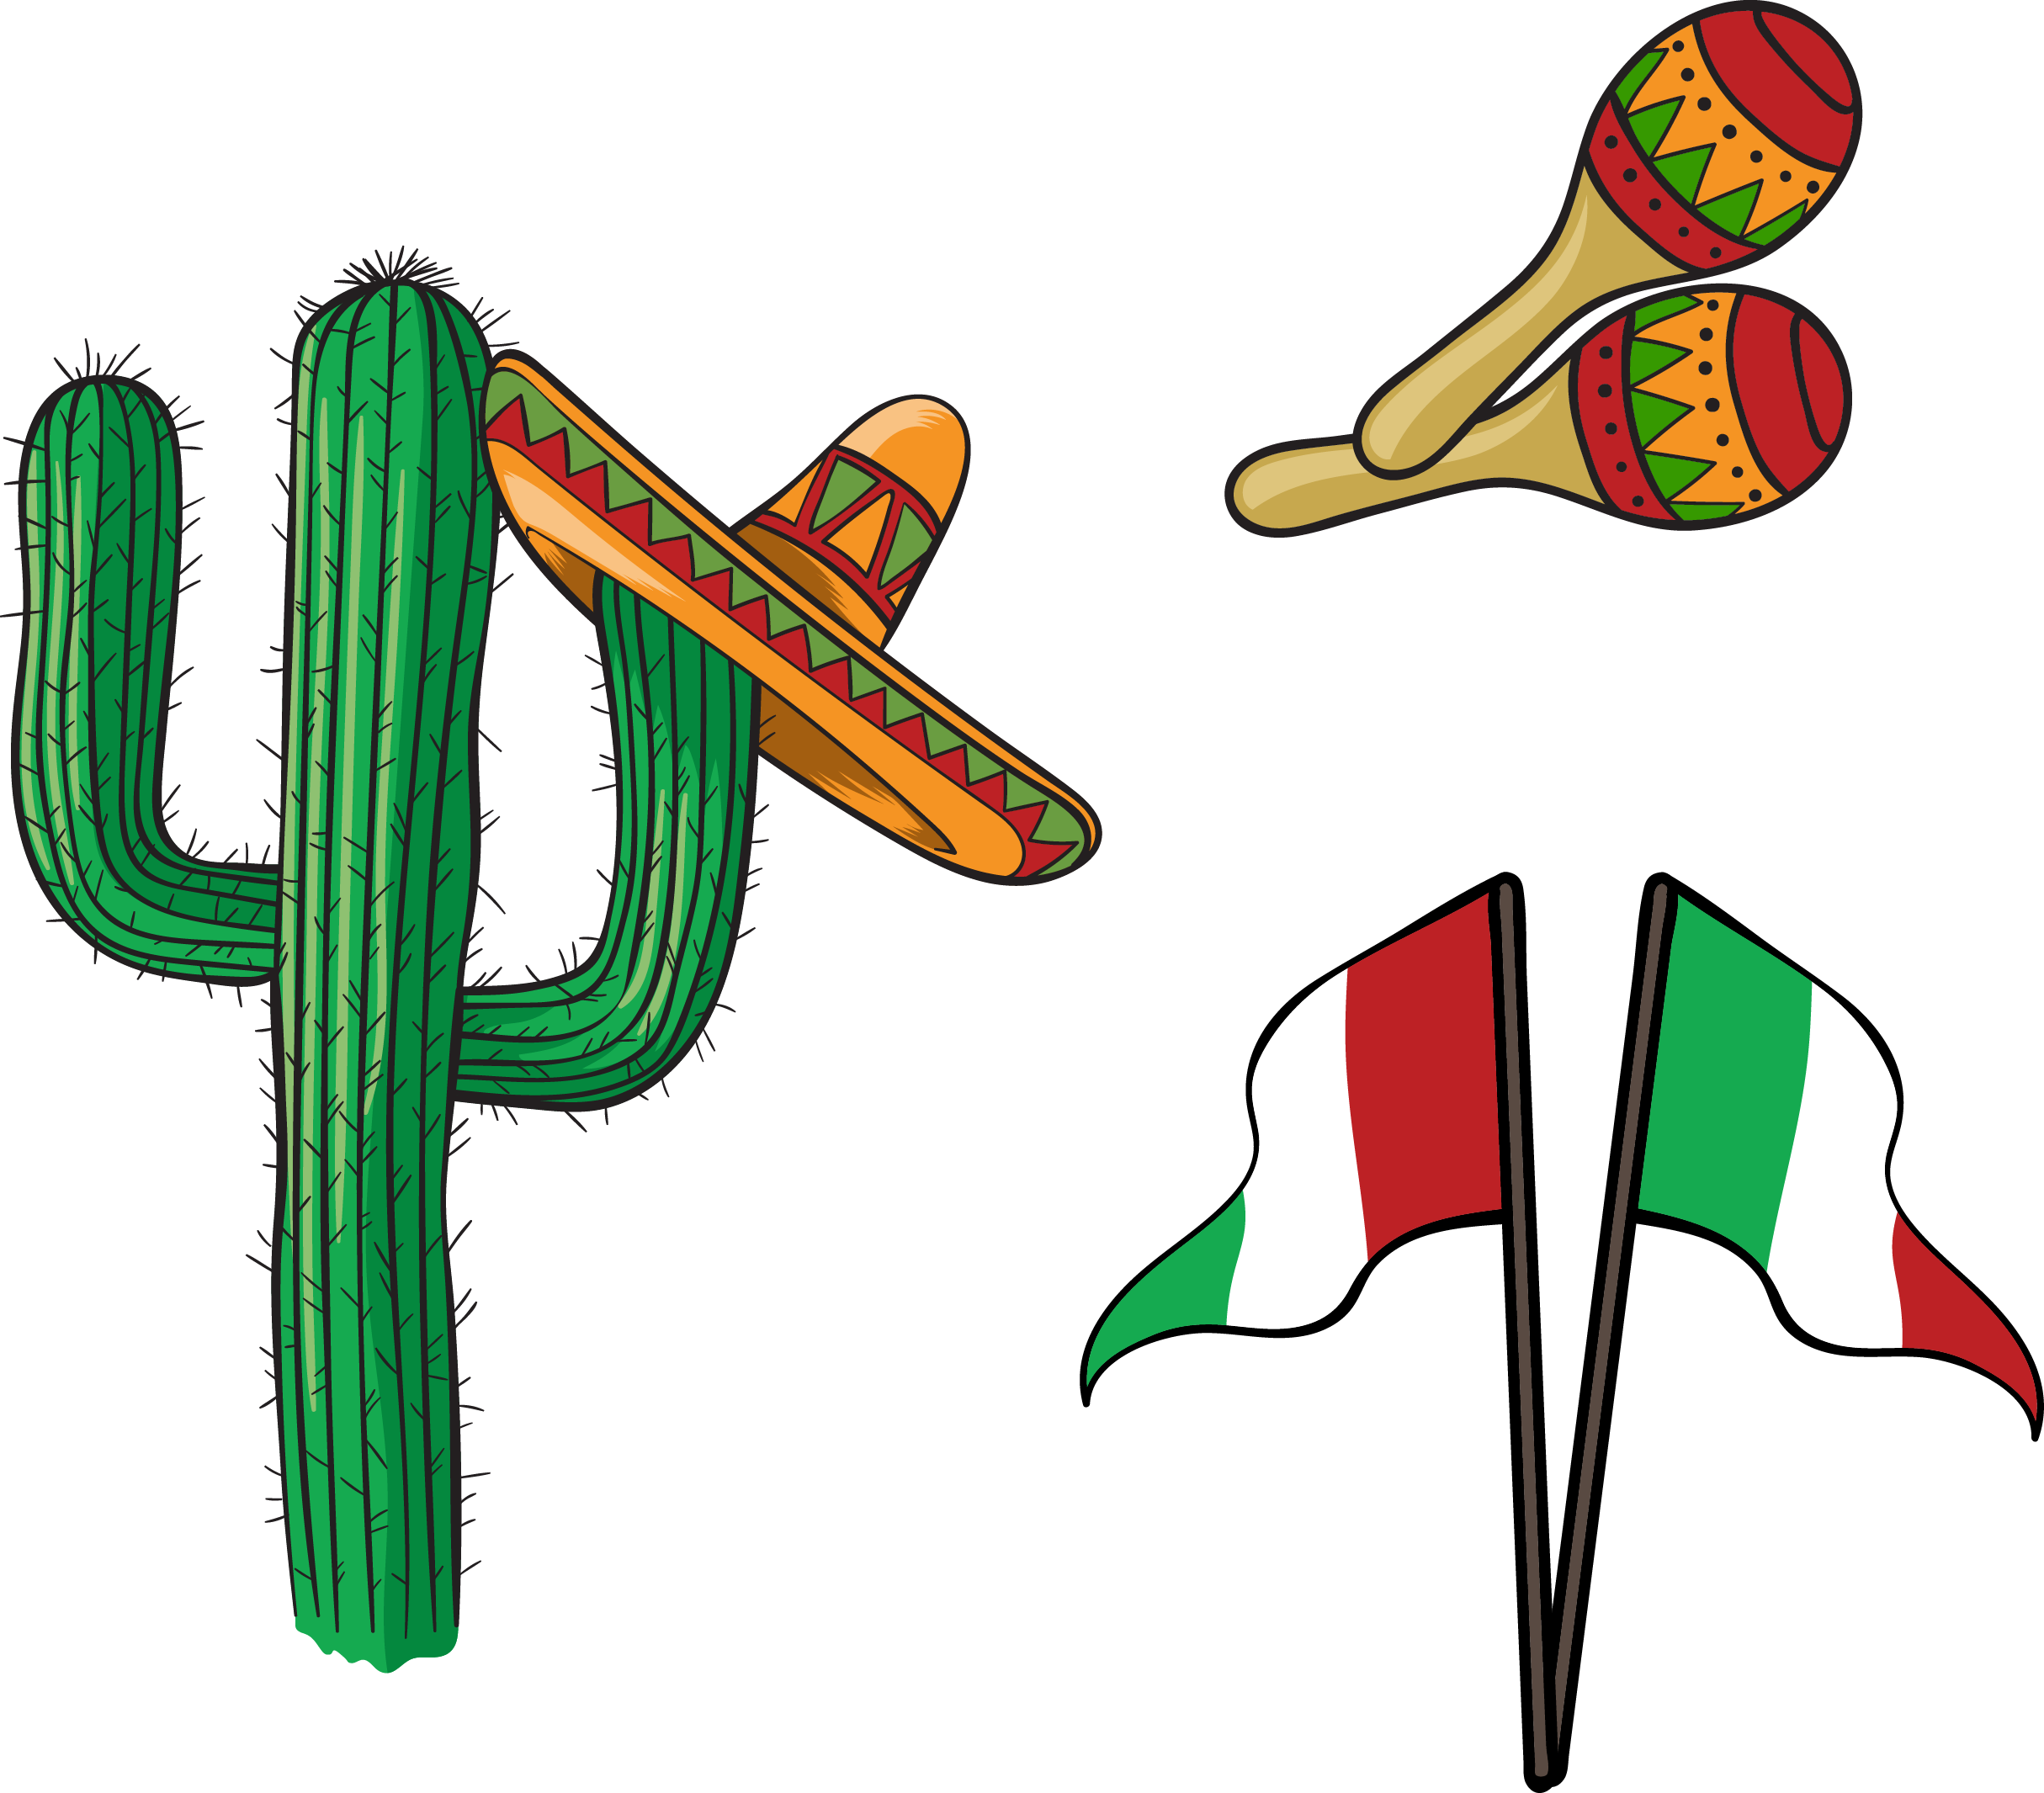 Mexico Mexican Cuisine Burrito Taco - Cinco De Mayo Illustration With Mexican Elements Cufflinks (2429x2131)